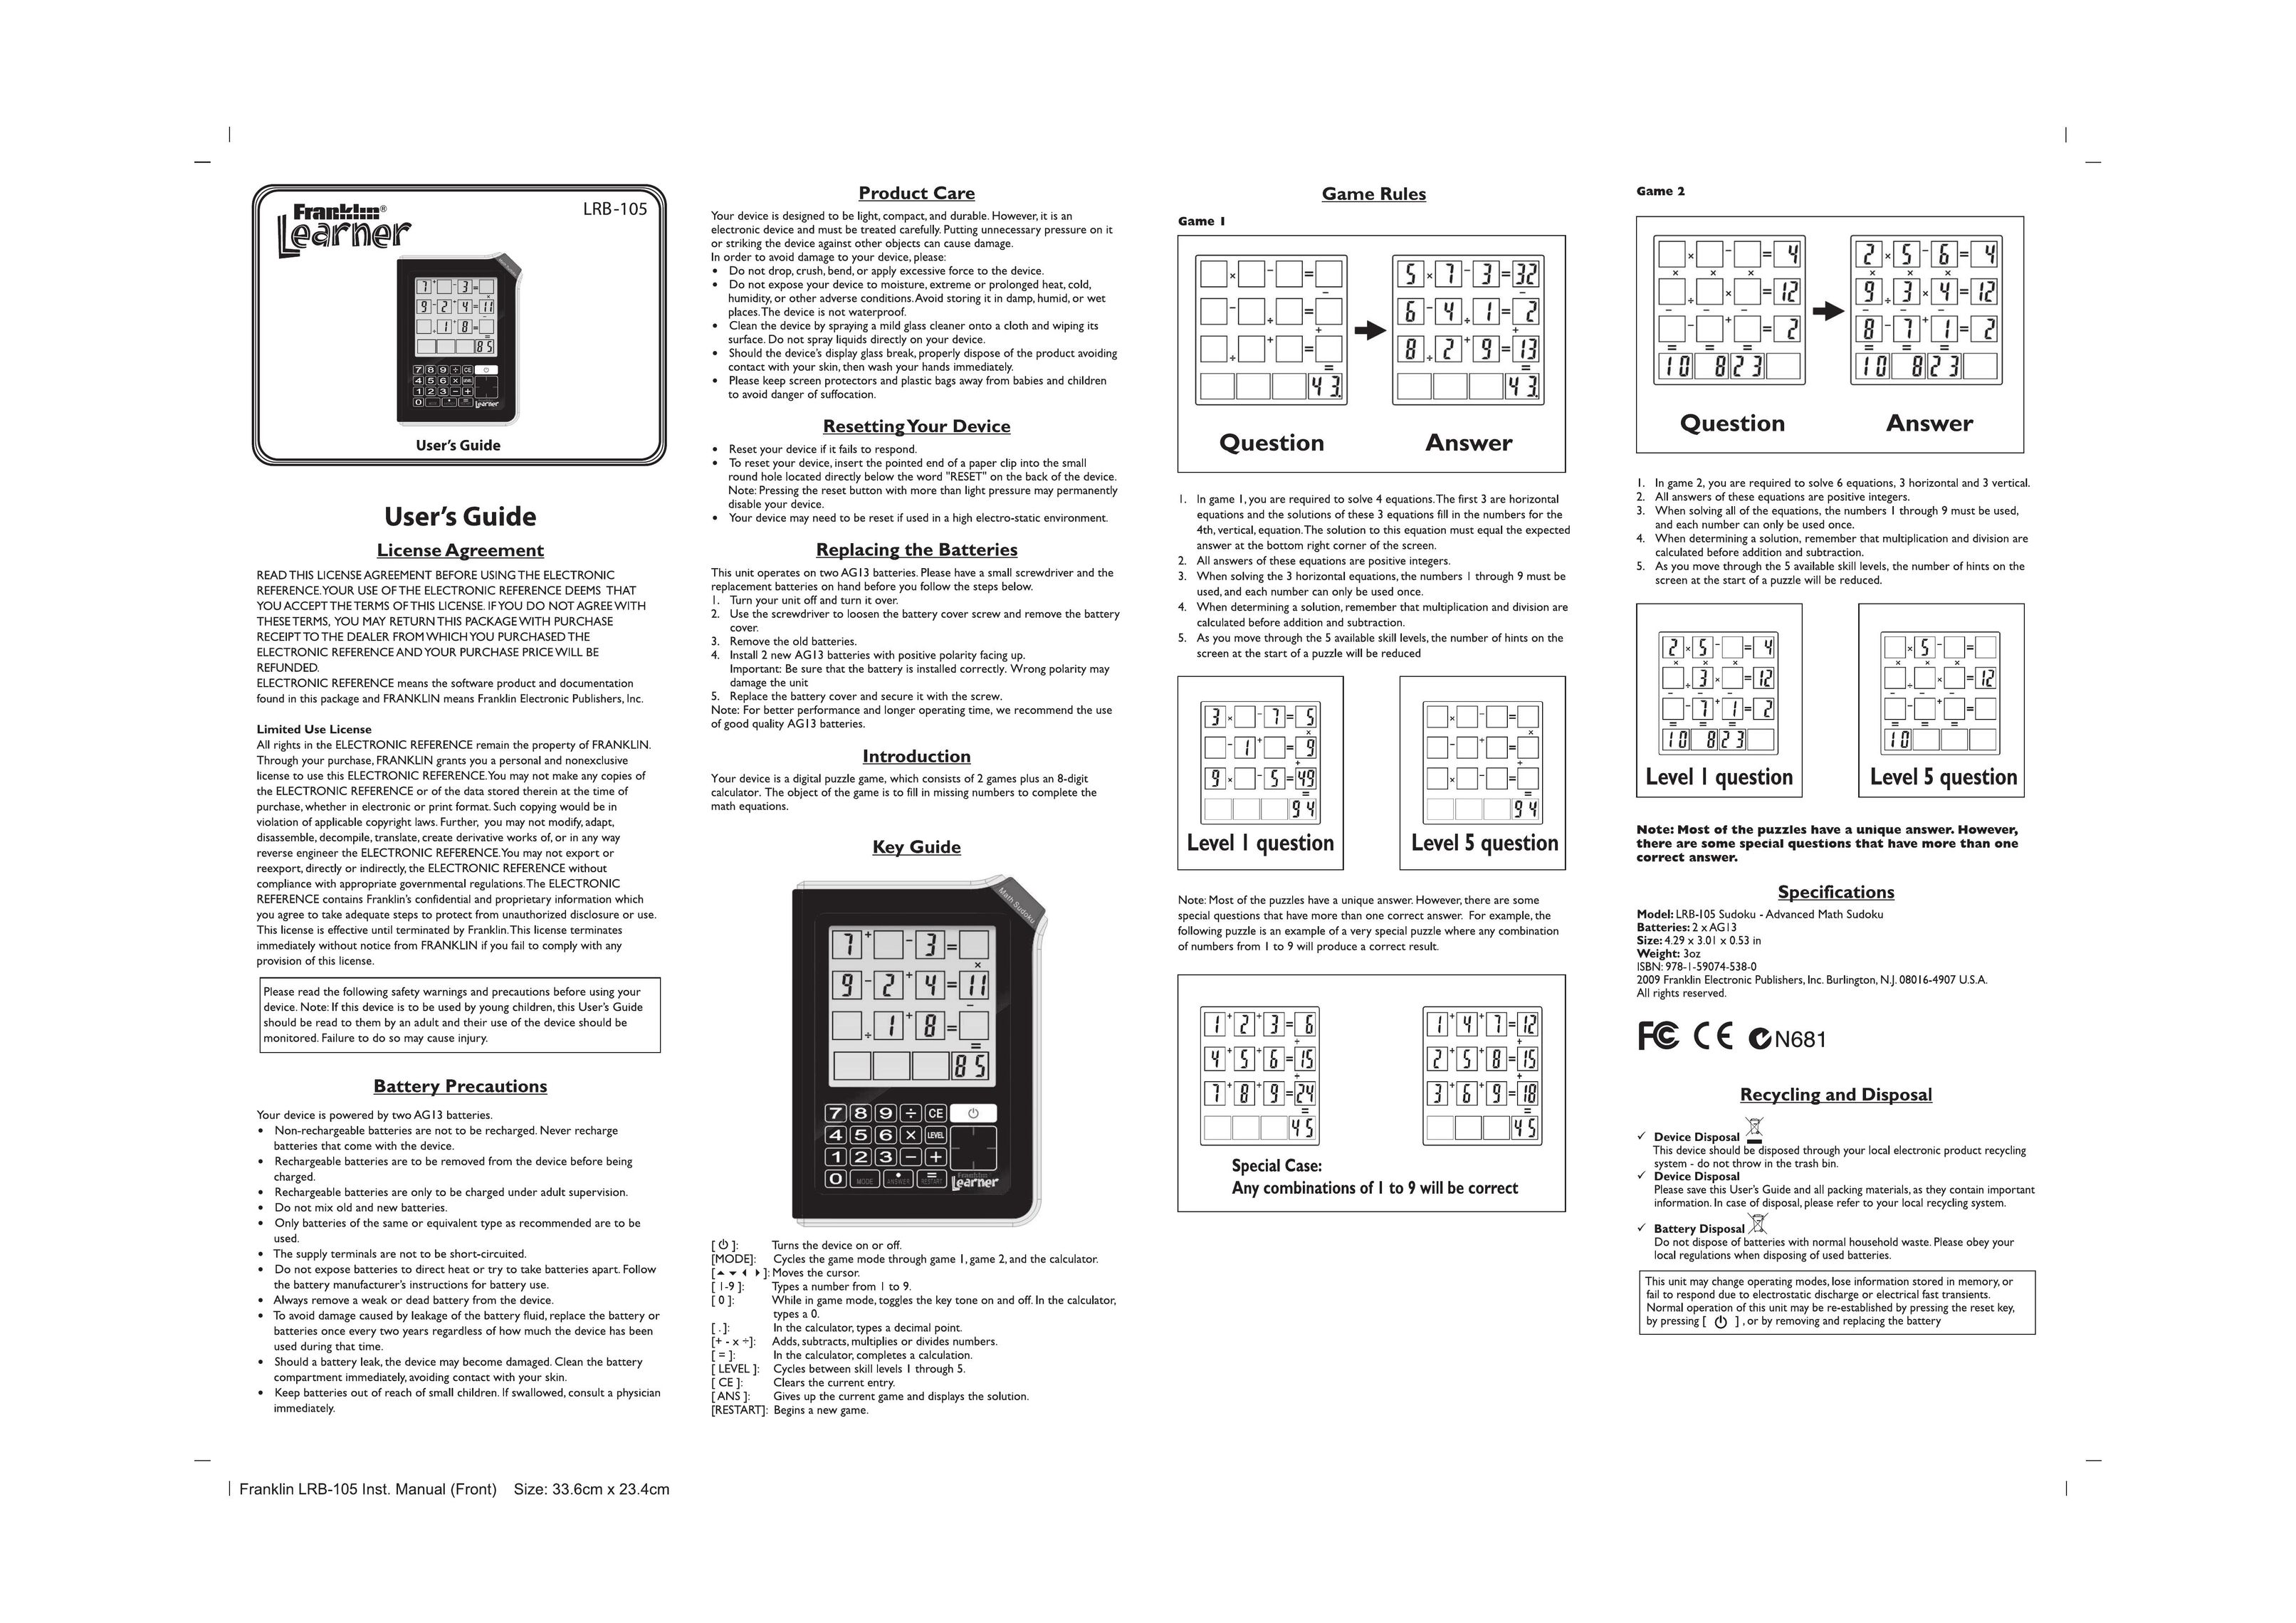 Franklin LRB-105 Calculator User Manual